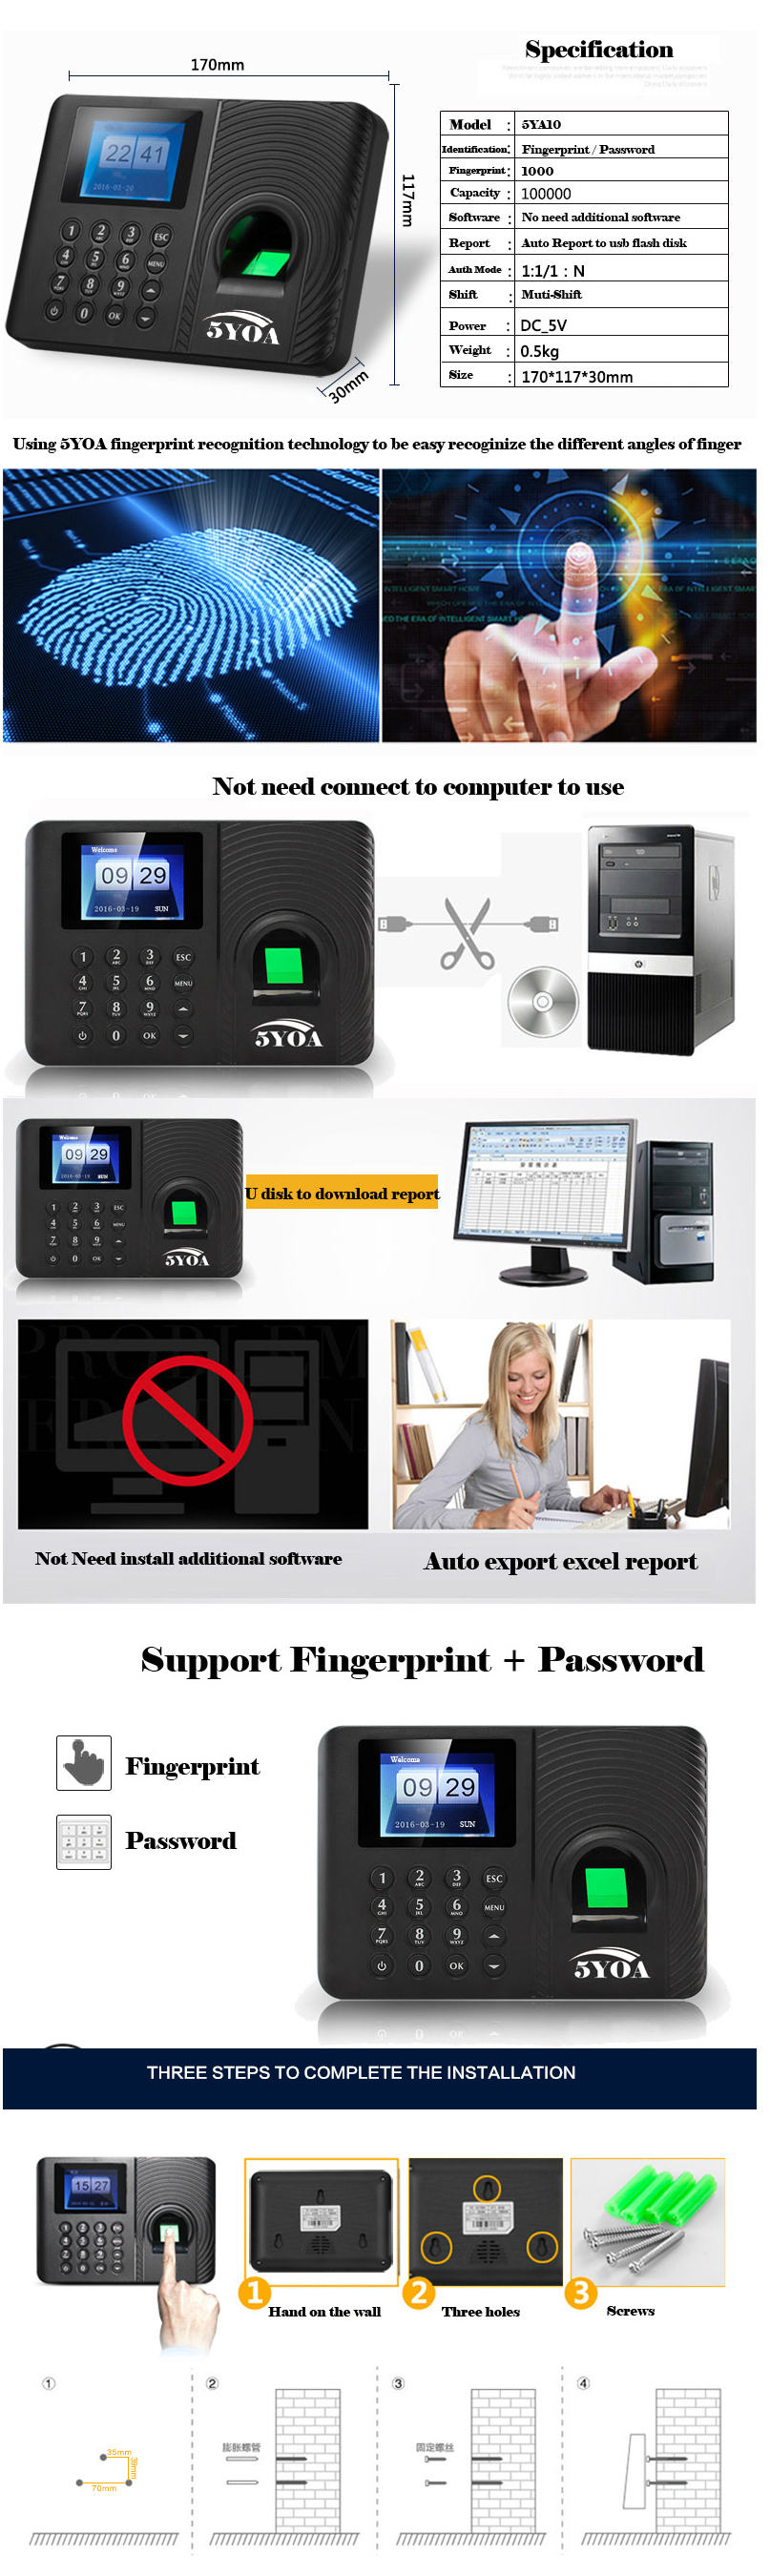 5YOA-A10-Biometric-Fingerprint-Time-Attendance-Machine-Clock-Recorder-Employee-Recognition-Device-El-1446241-1